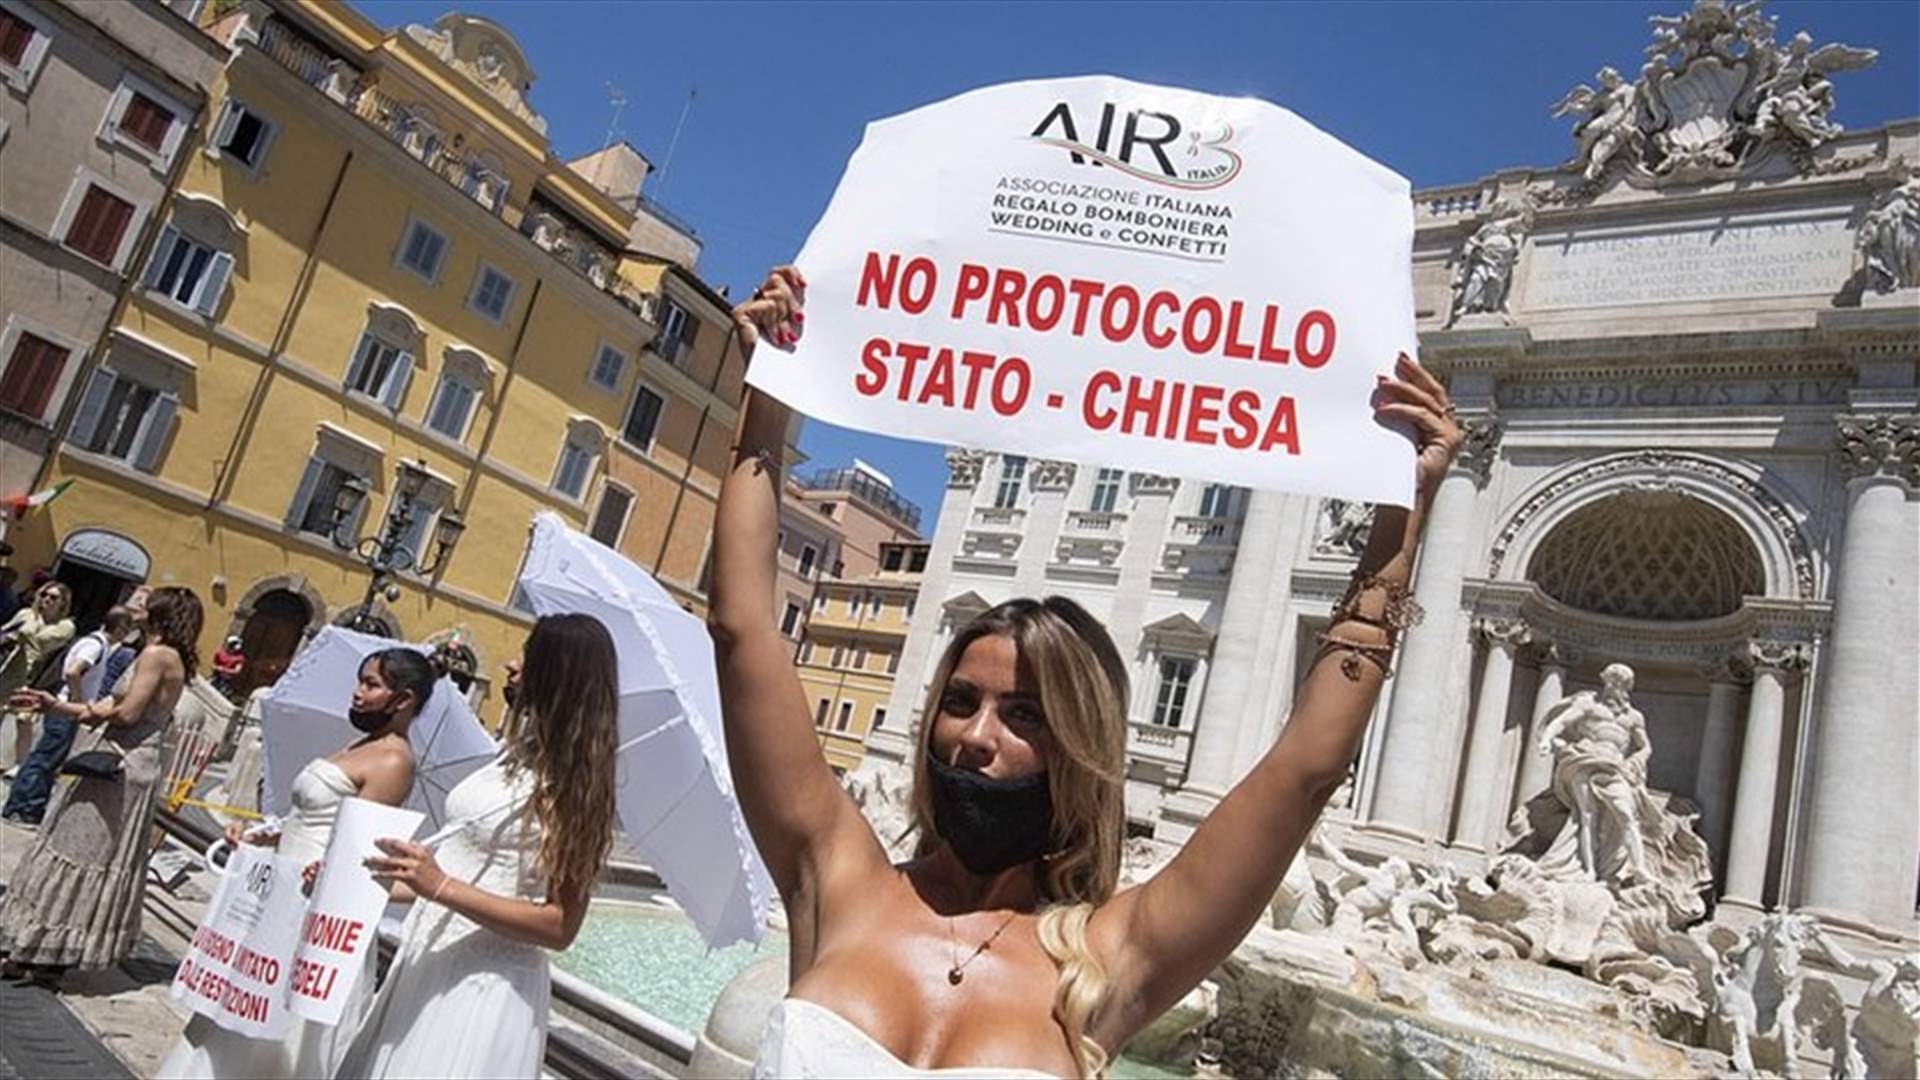 عرائس إيطاليا غاضبات... تظاهرن بفساتينهن احتجاجاً على تأجيل حفلات الزفاف (صور)